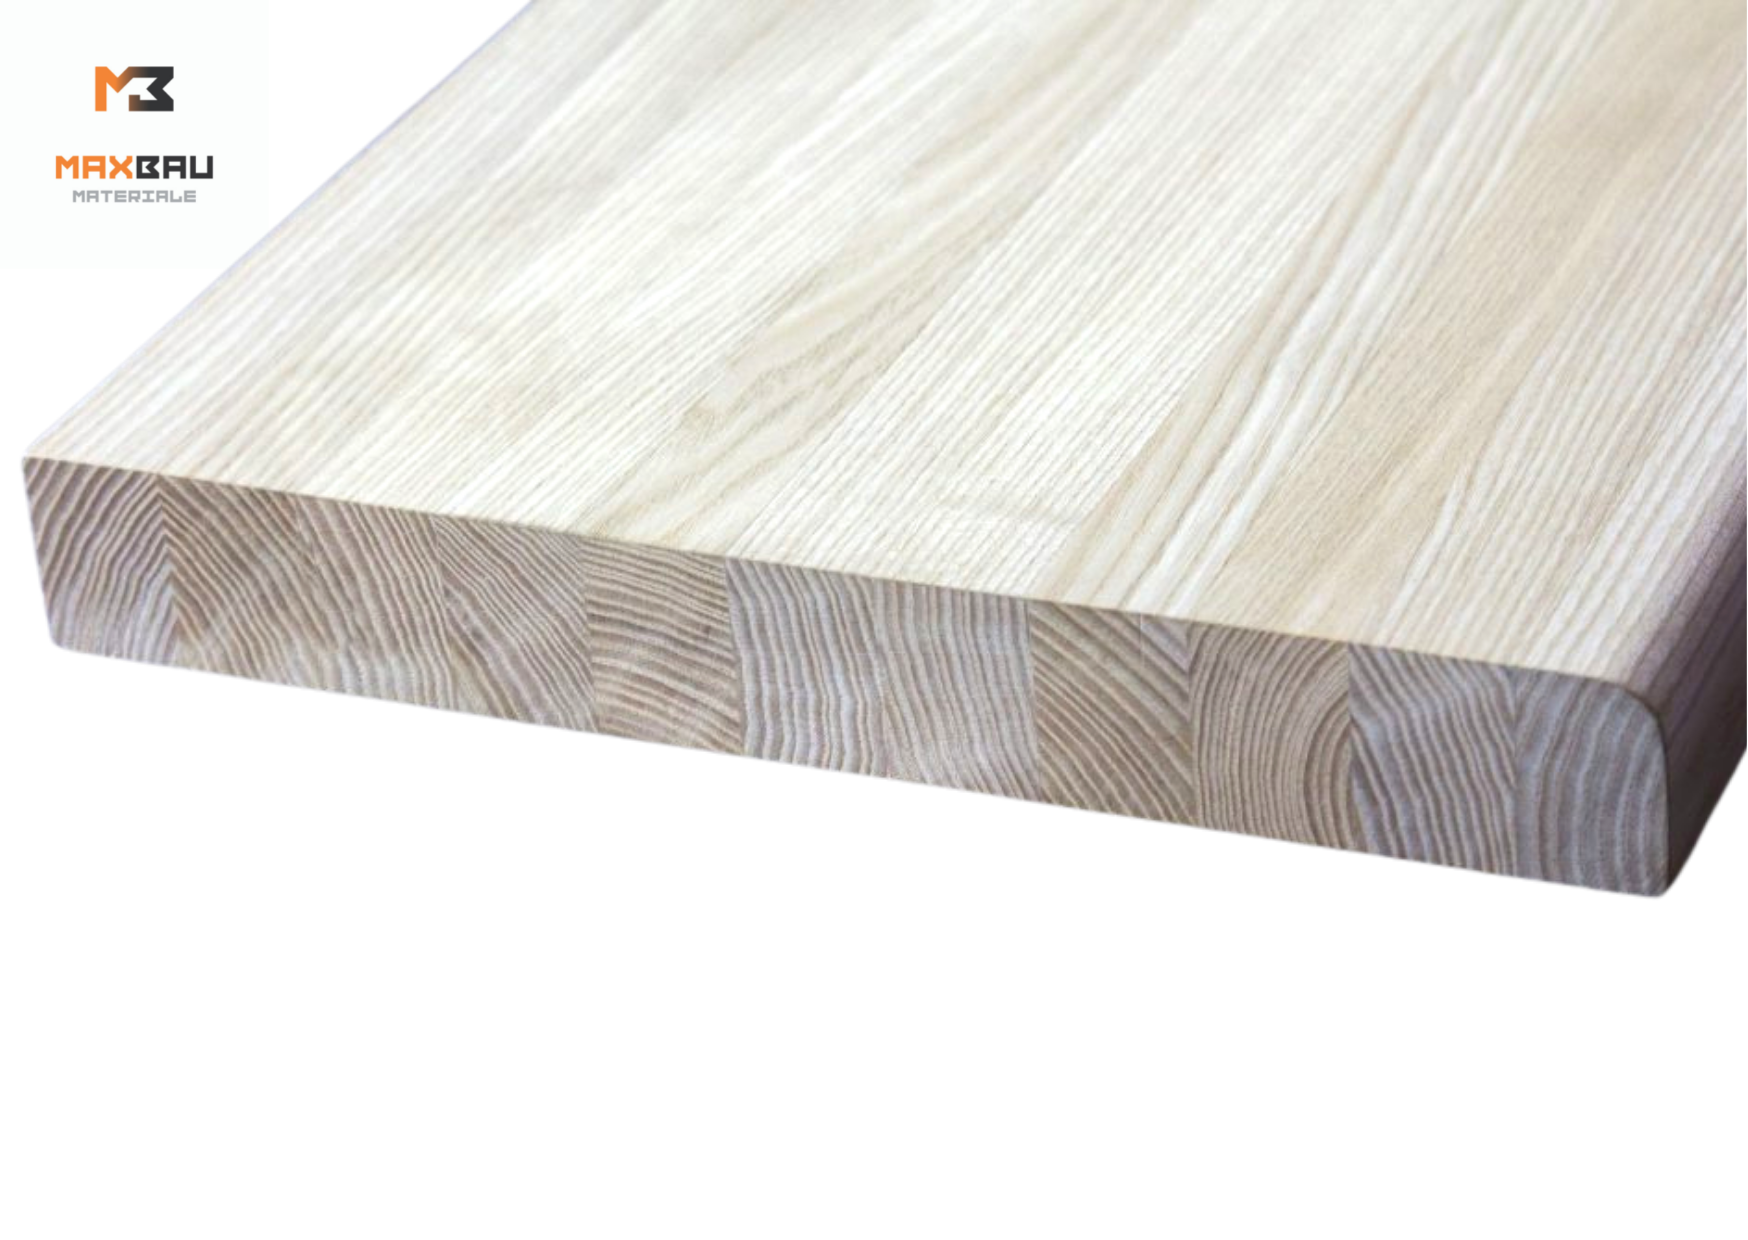 Plates of glued wood - MaxBau wooden plate glued 800 x 300 x 28 mm class AB, https:maxbau.ro